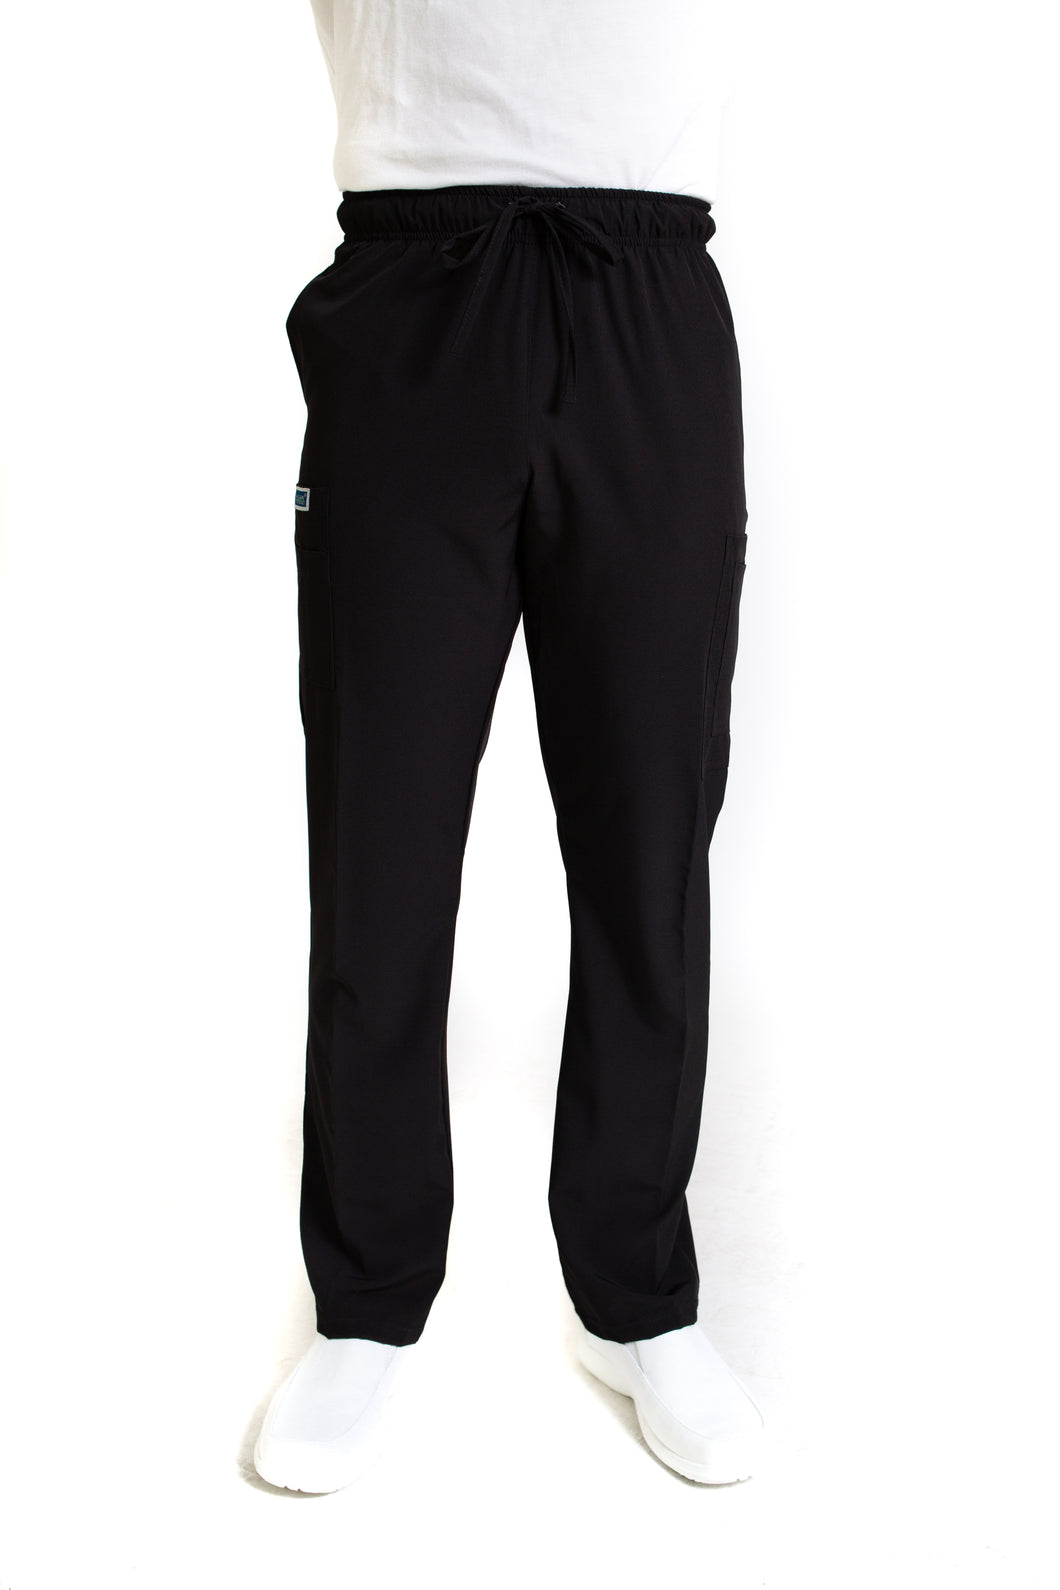 Pantalón Pant EA-02P REPELENTE A FLUIDOS-Color NEGRO HOMBRE-HASSAN Uniformes